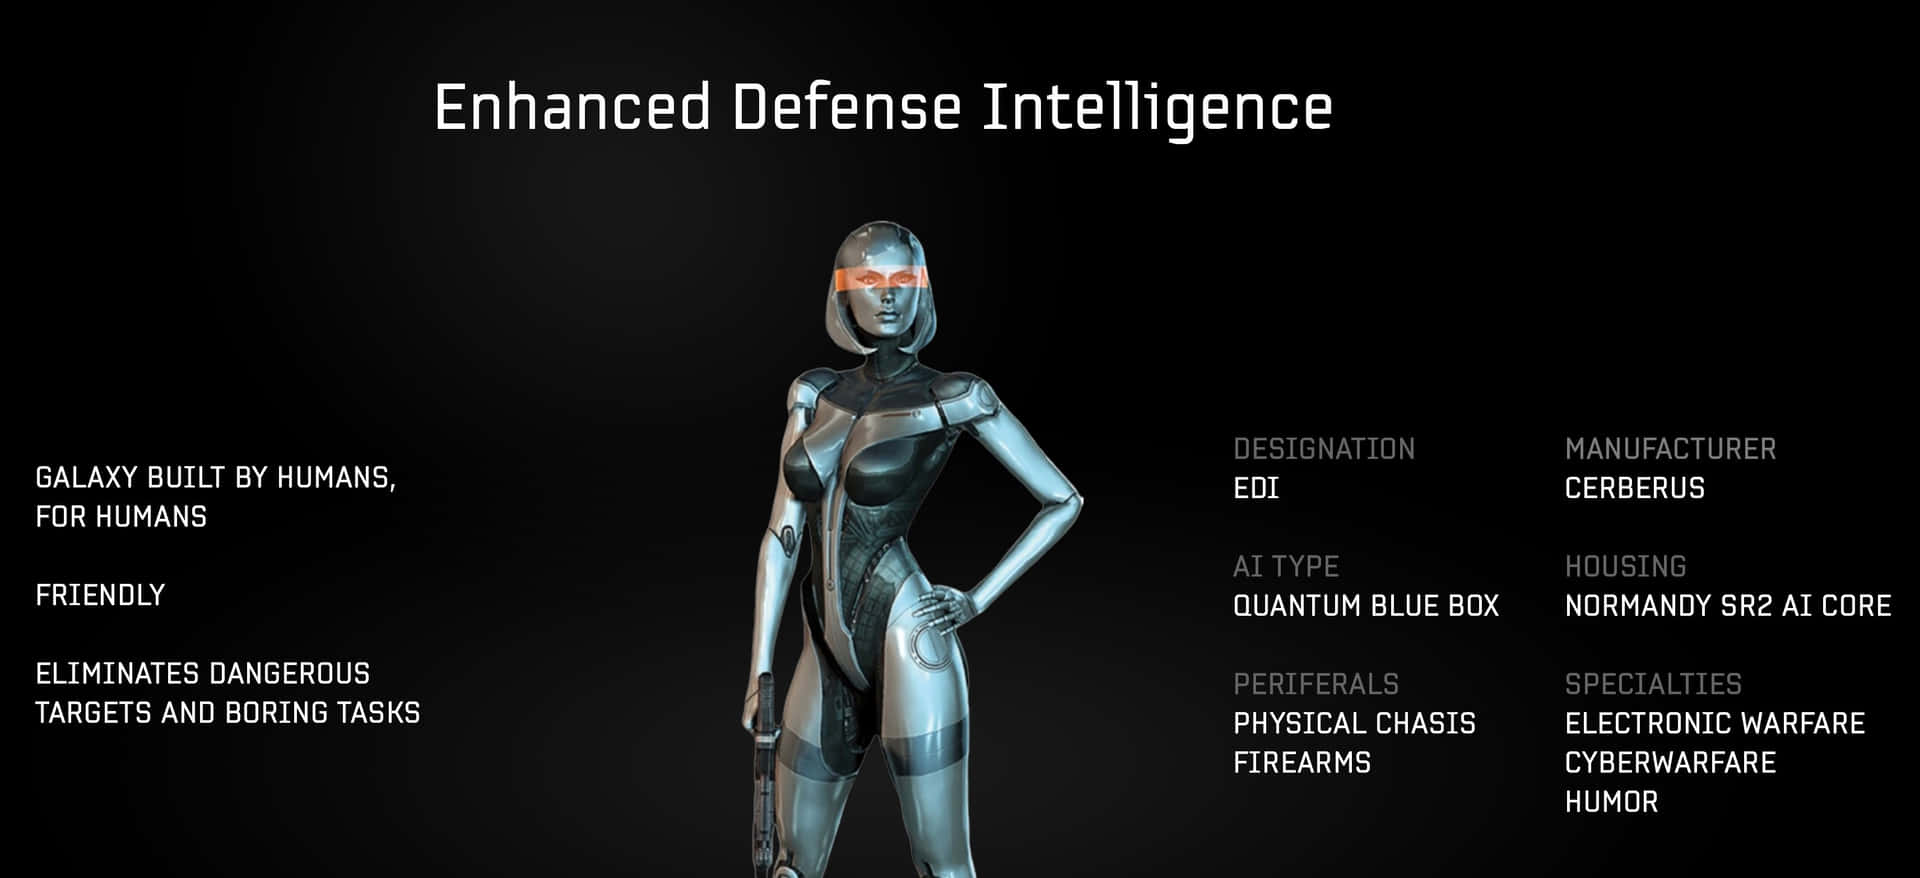 EDI - The Artificial Intelligence in Mass Effect Wallpaper